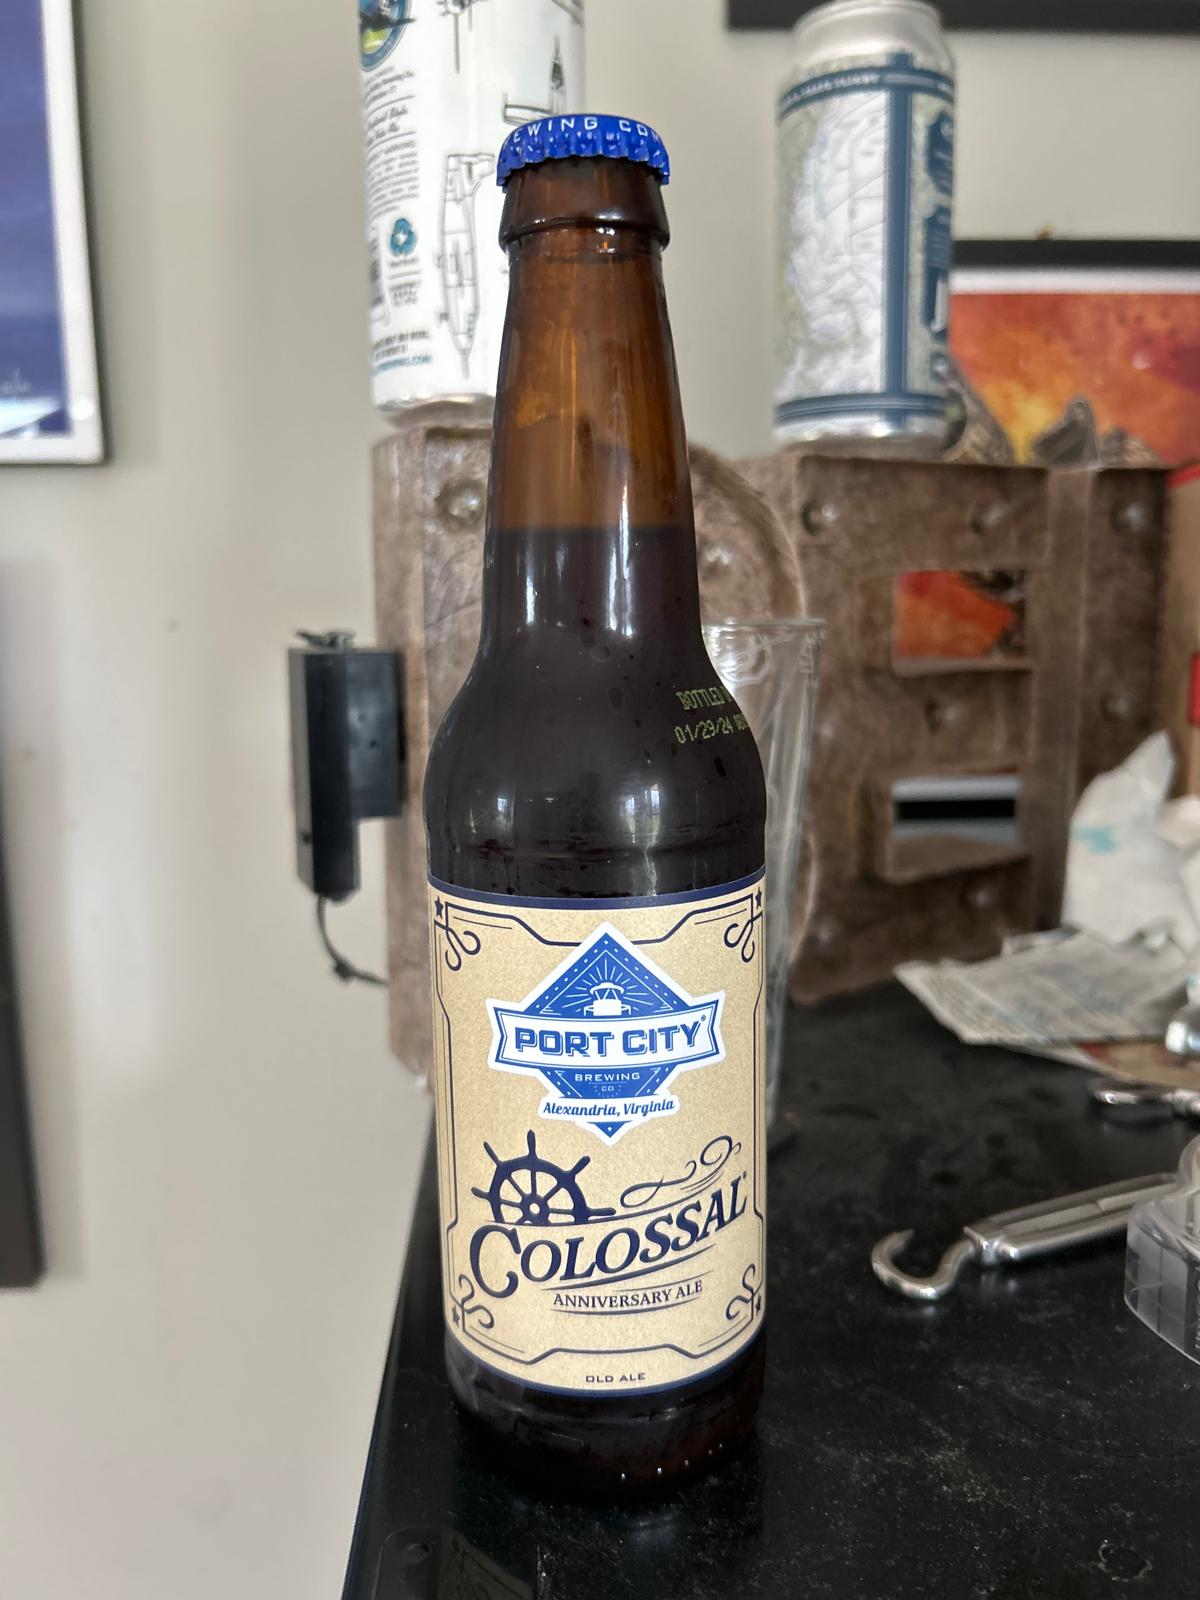 Colossal: Anniversary Ale